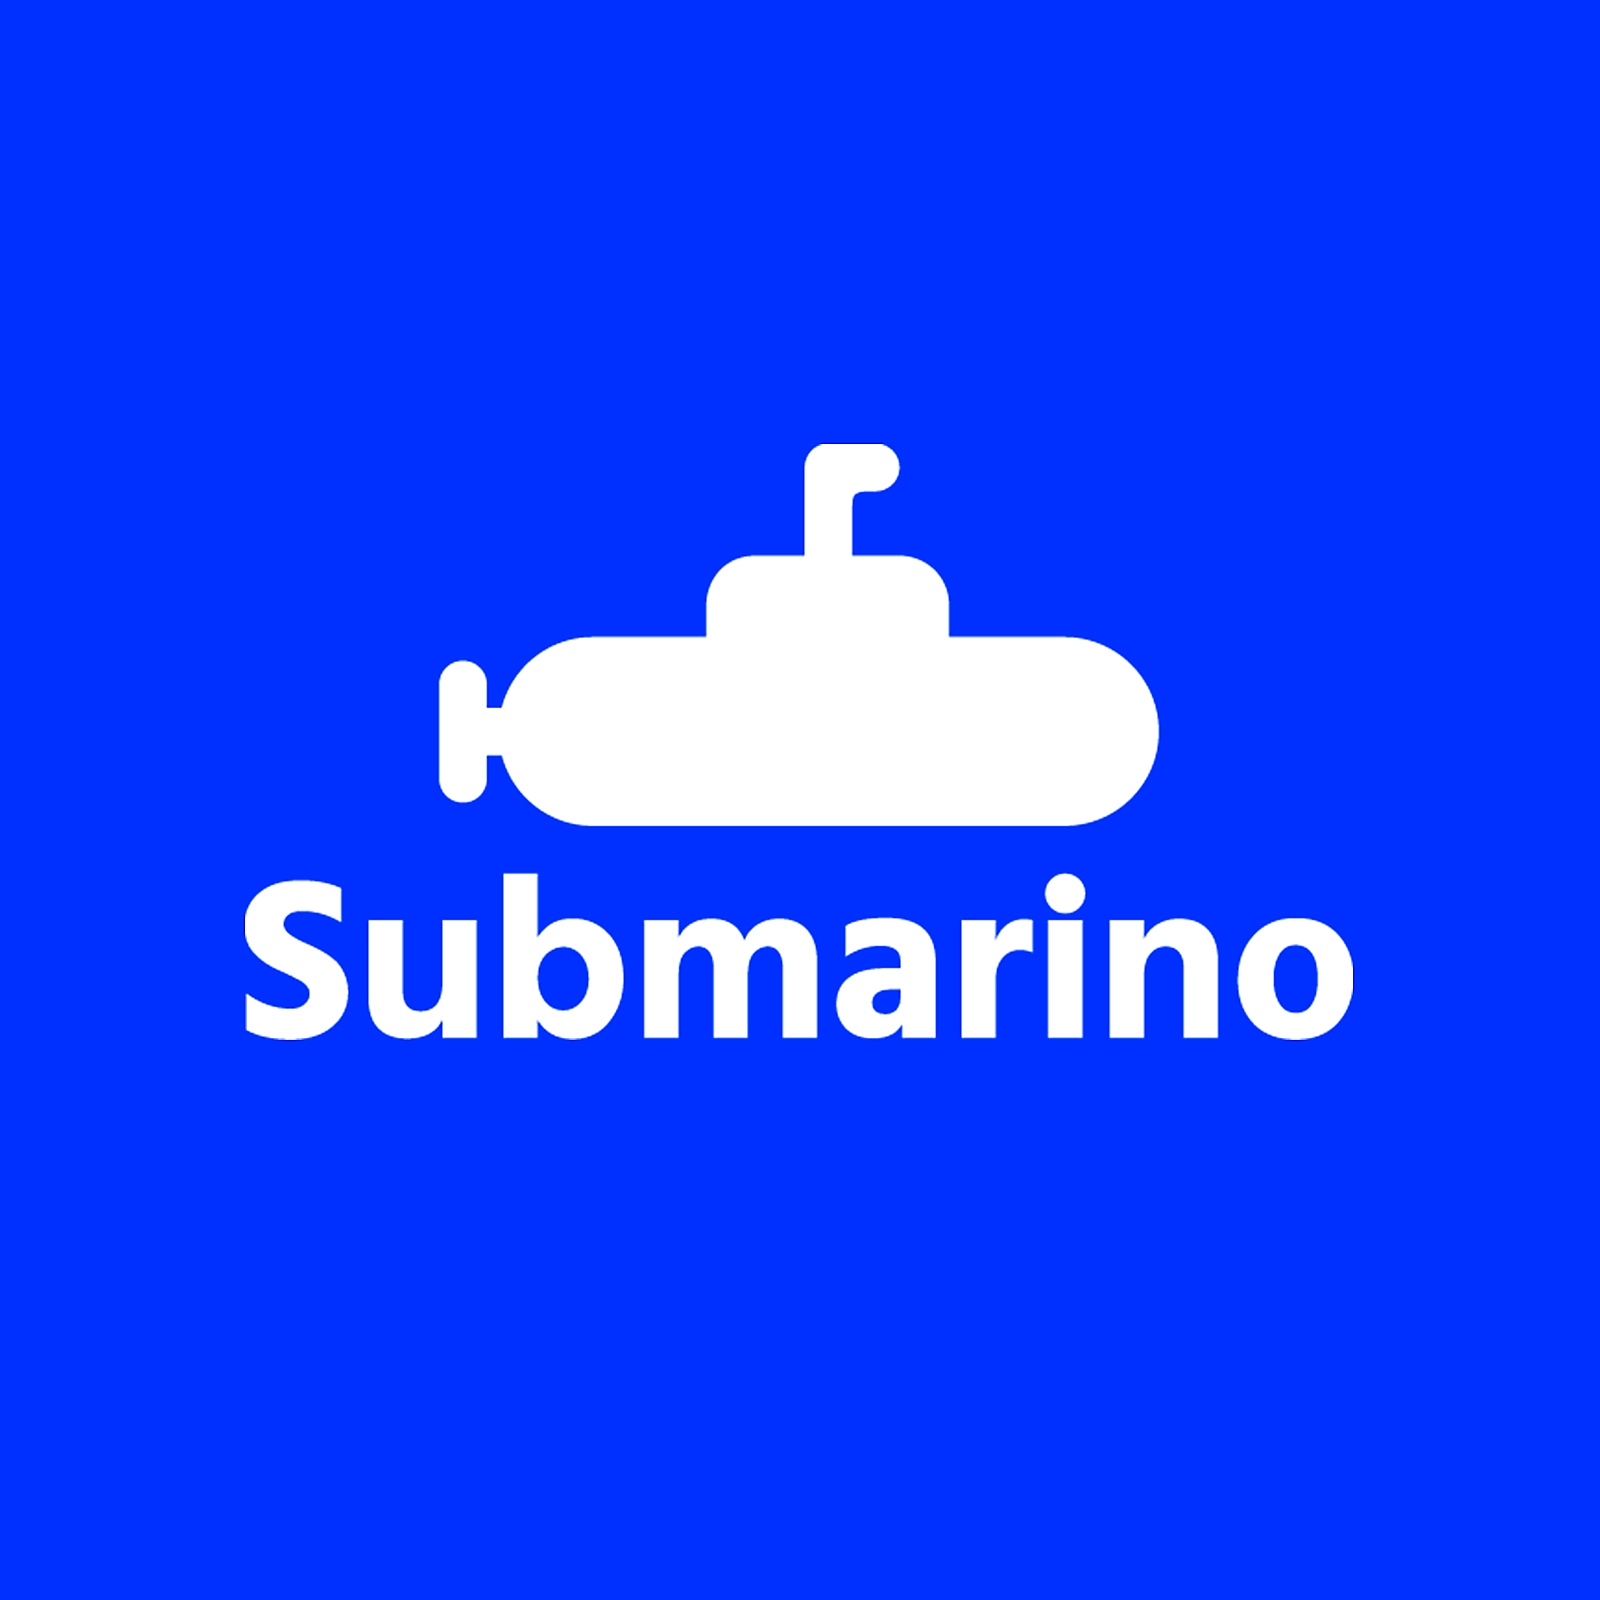 Gran Turismo 7 PS5 Submarino